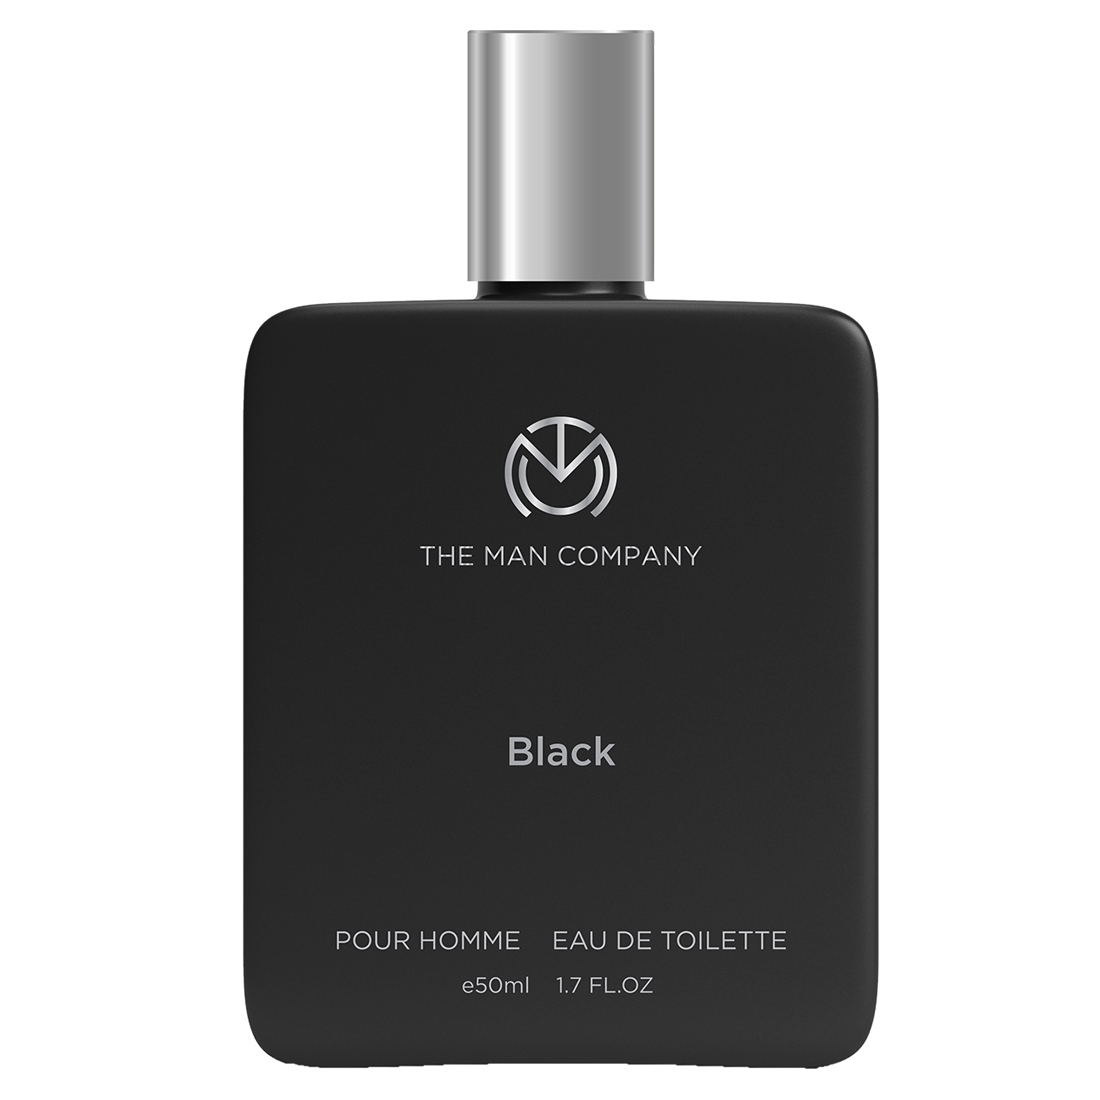 The Man Company | The Man Company Black perfume Eau de Toilette - 50 ml